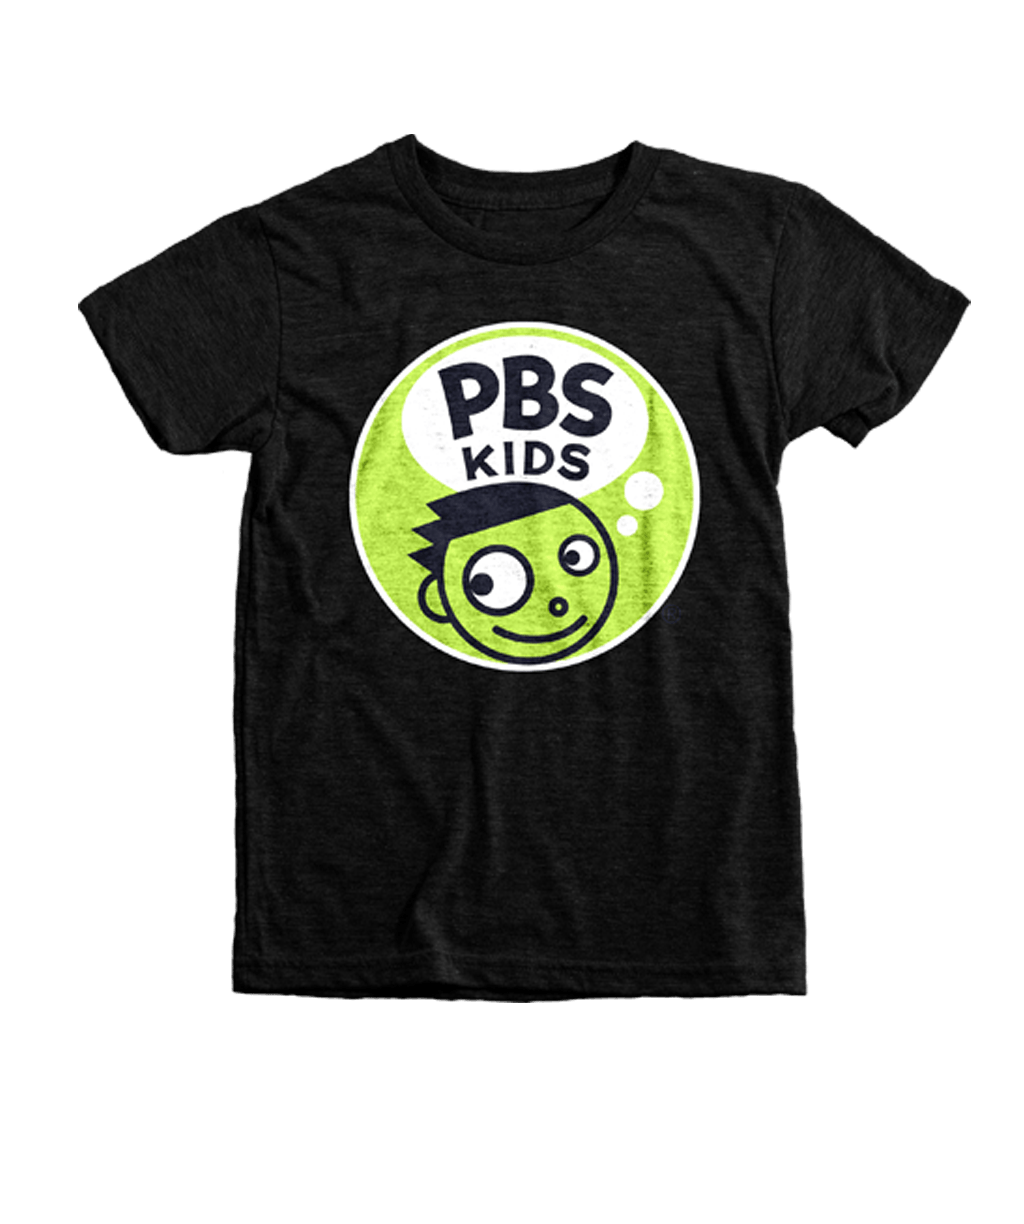 PBS KIDS Logo - PBS Kids Logo Tee. Steel City Brand. PBS T Shirt